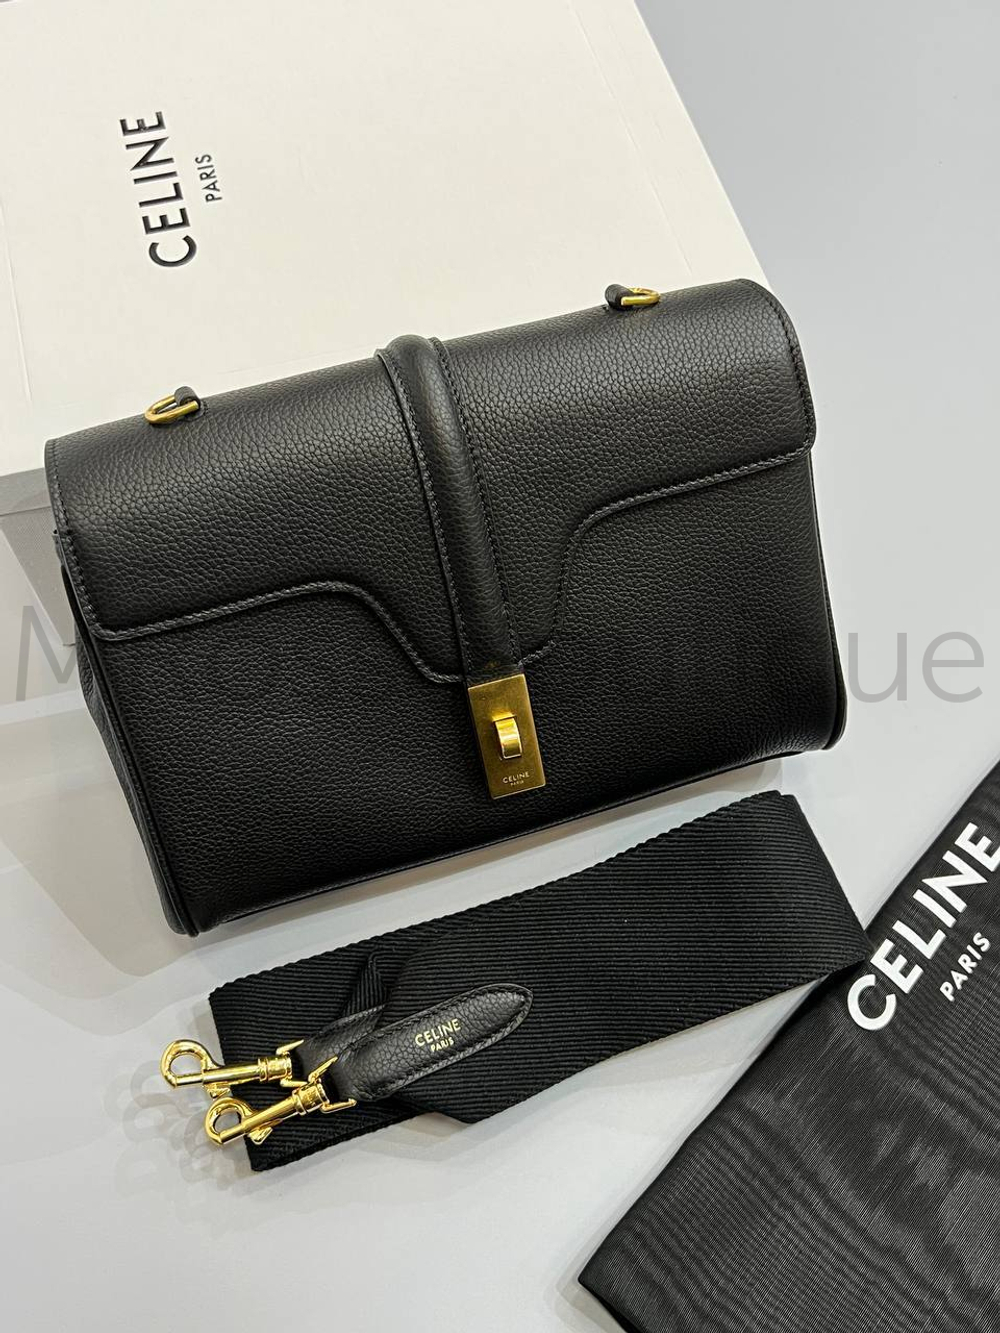 Женская брендовая сумка Селин (Celine) Teen Soft 16 in Supple Grained Calfskin - Black премиум класса